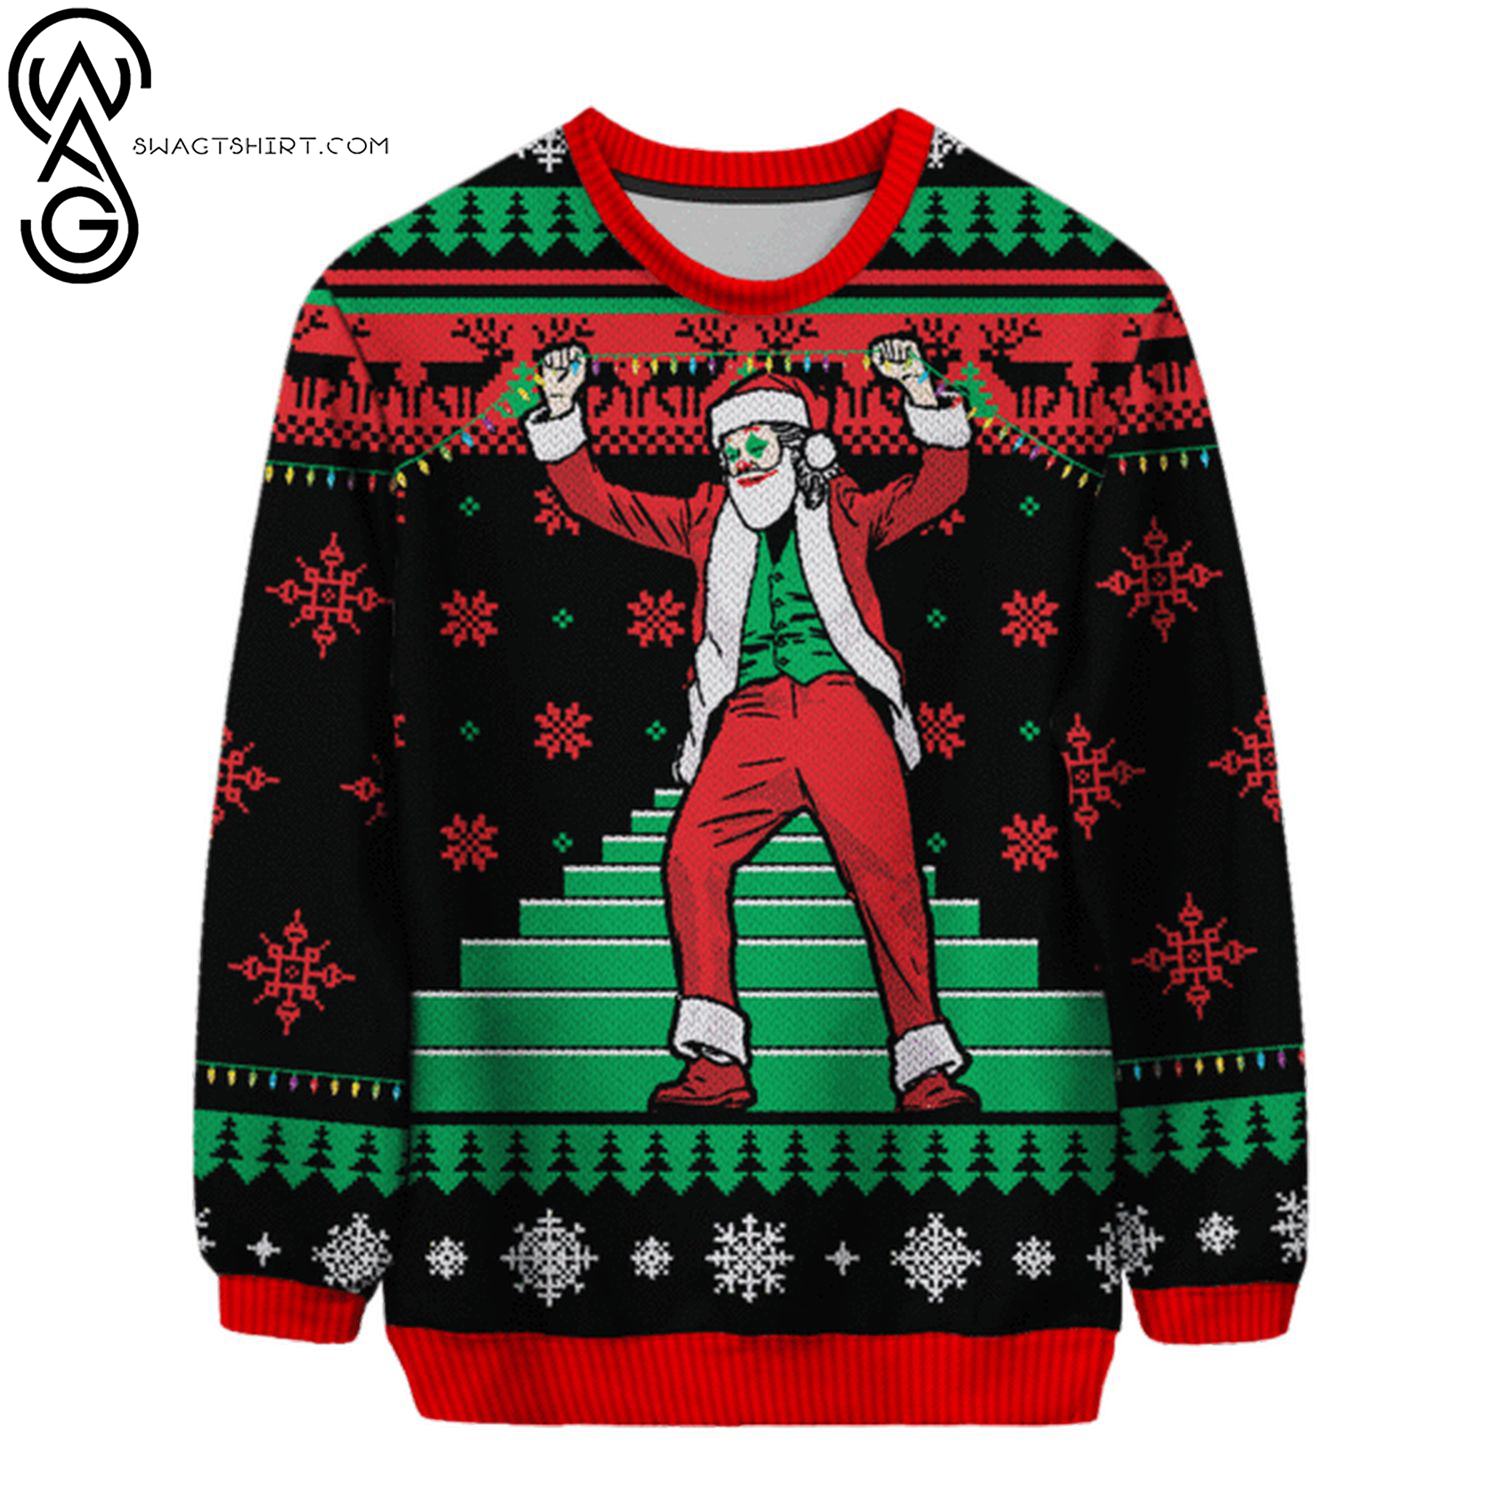 Santa claus joker full printing ugly christmas sweater